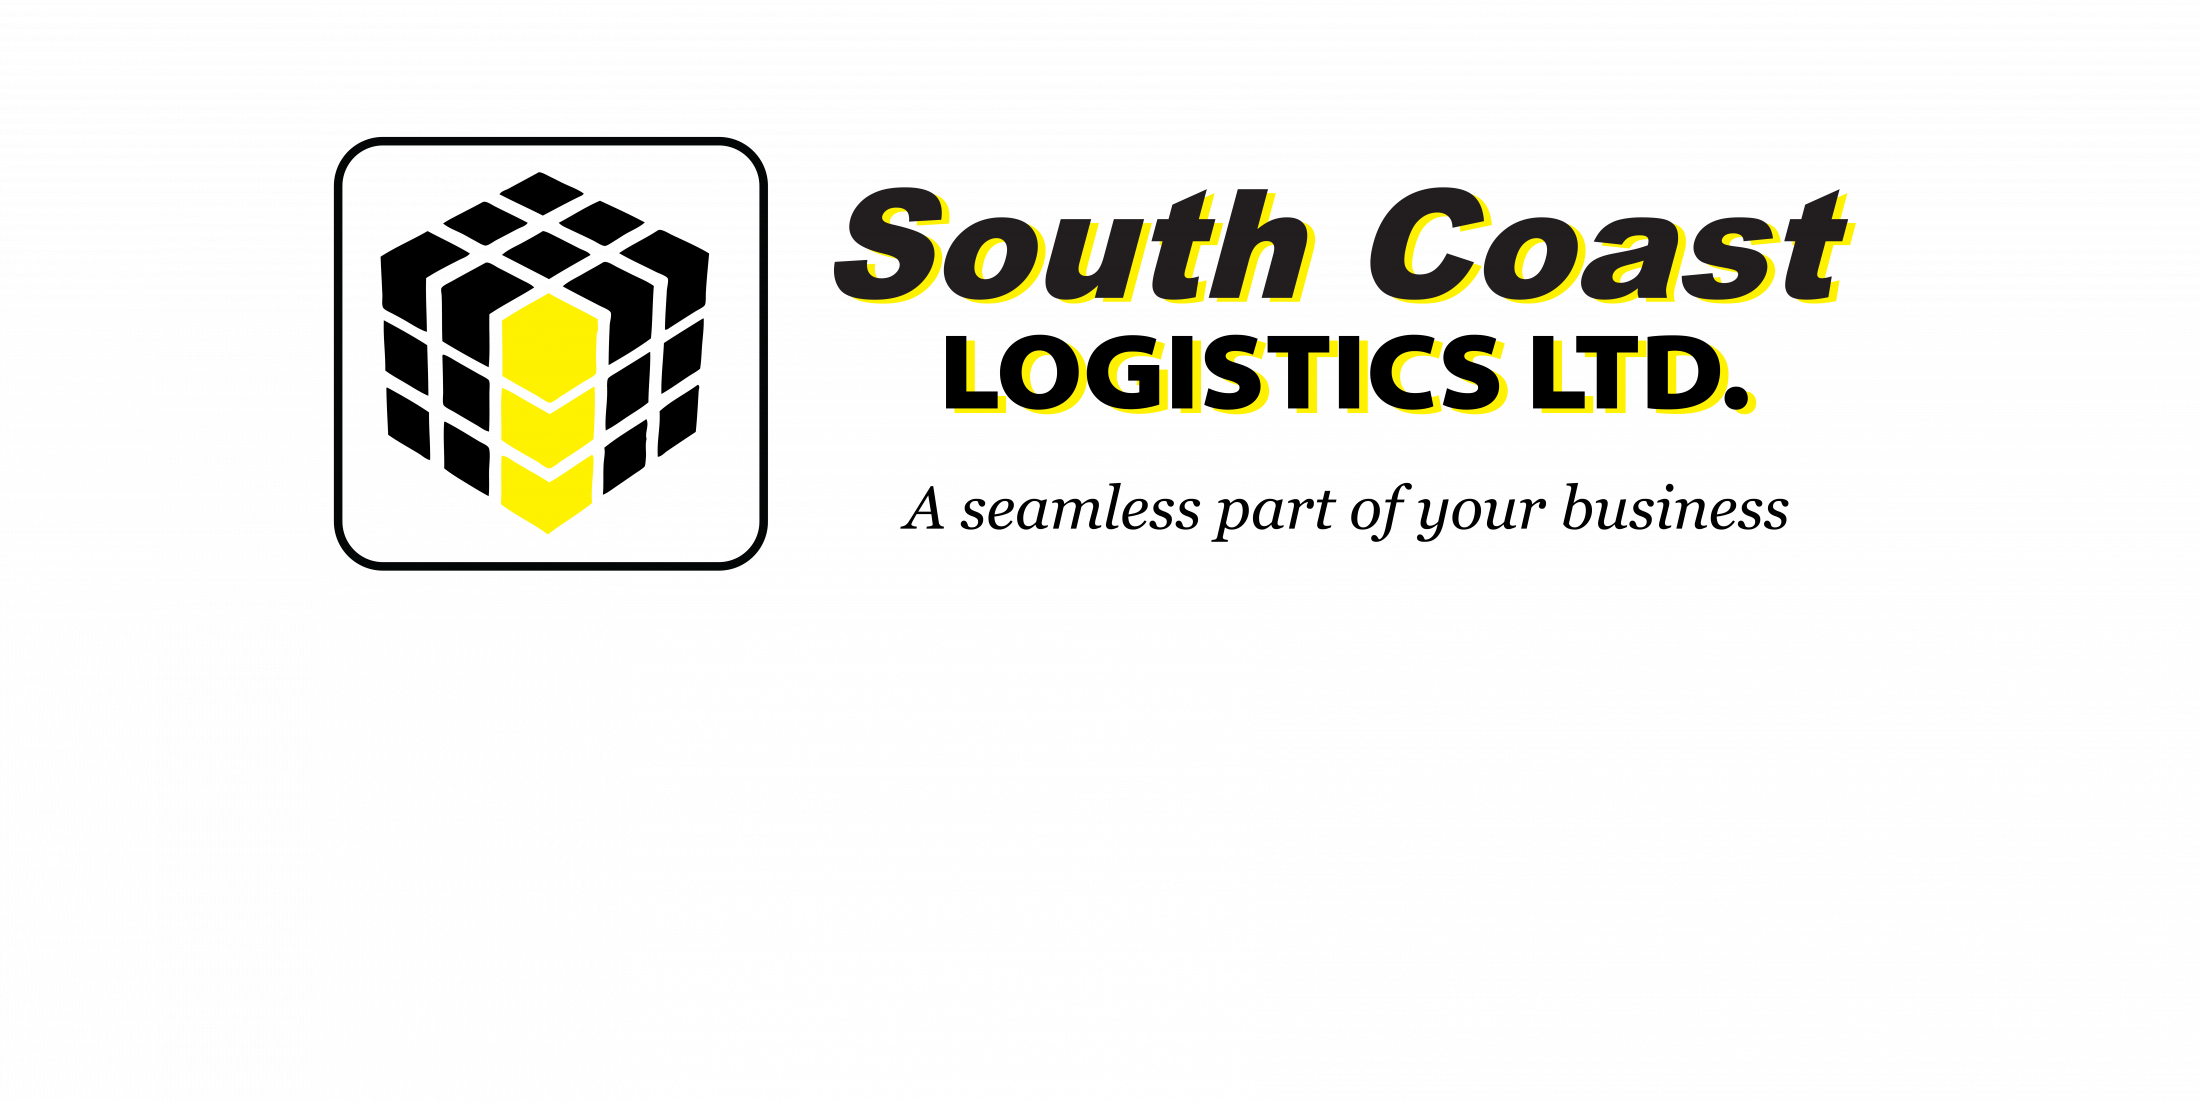 South Coast Logistics Ltd